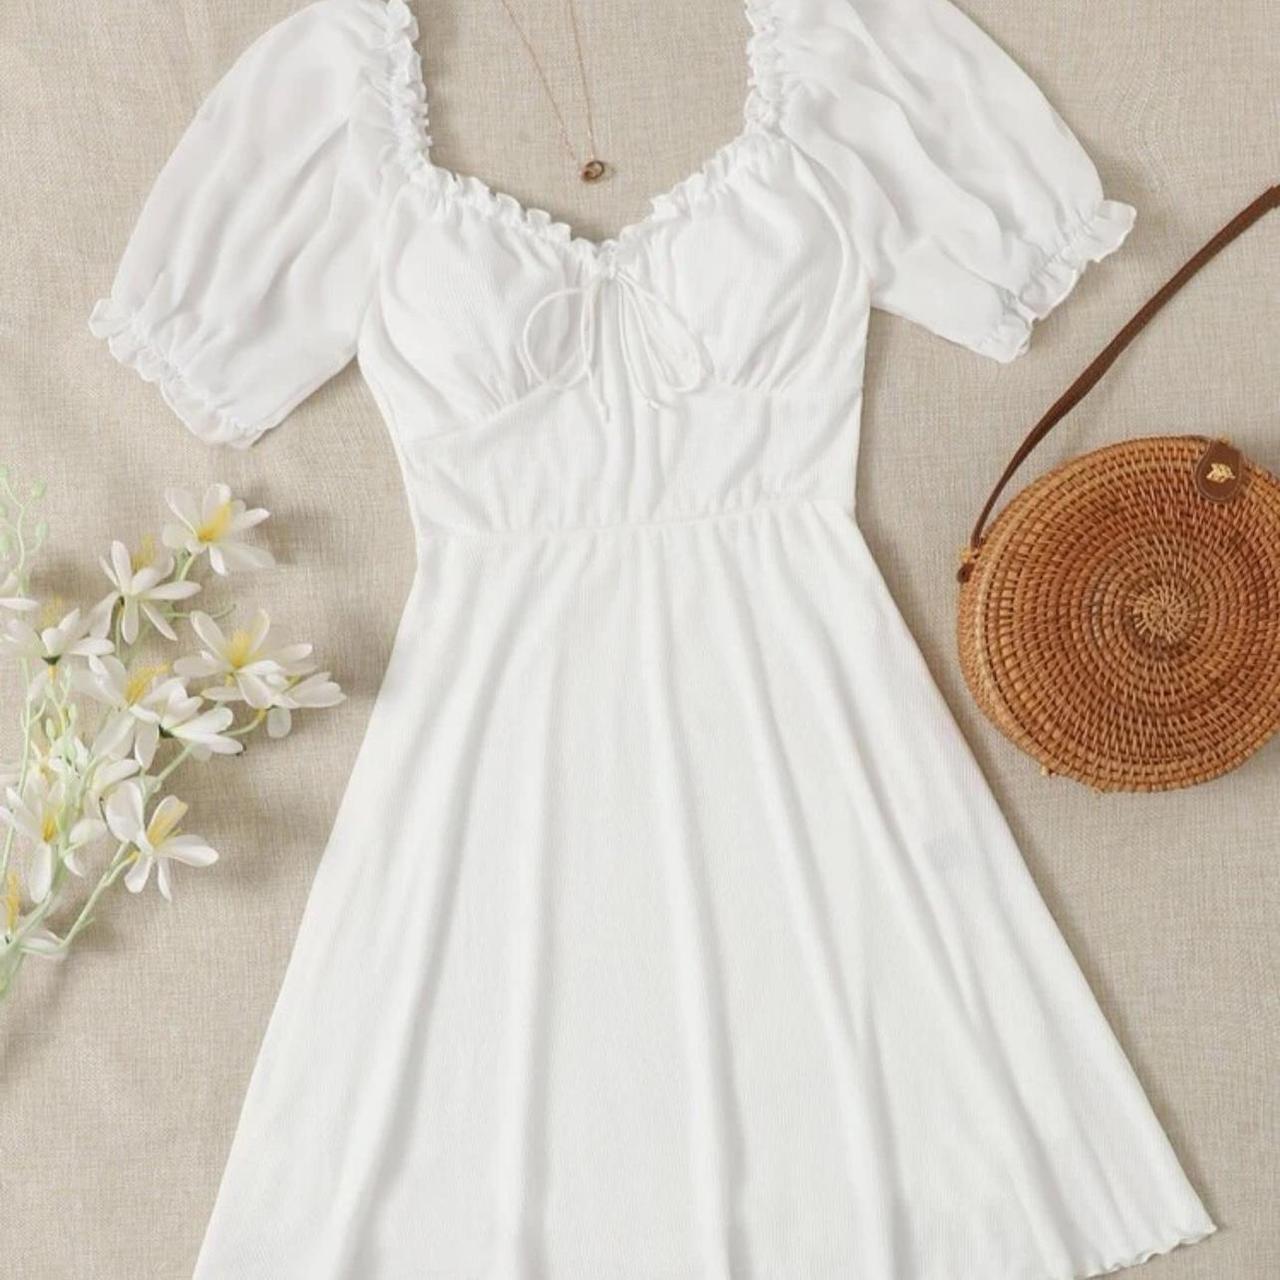 Shein blue and white dress. Summer dress Size m but - Depop